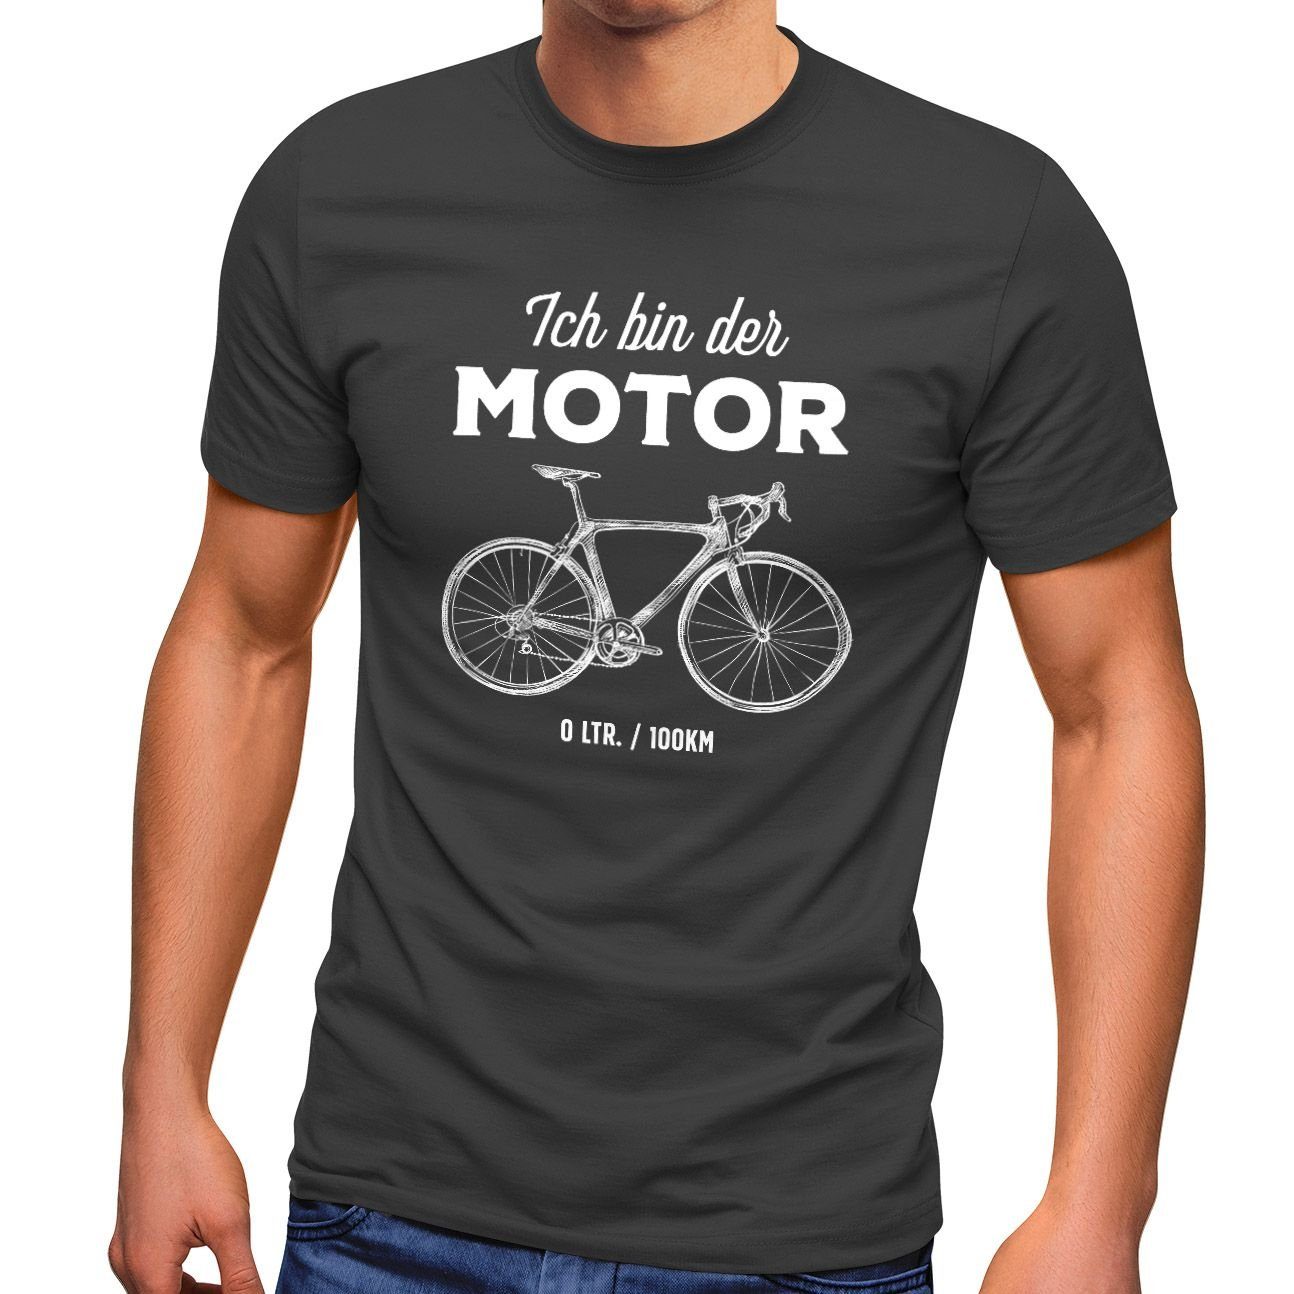 T-Shirt lustig Rad MoonWorks Print I'm Moonworks® Print-Shirt grau the Fun-Shirt Fahrrad Motor Sprüche Engine Herren Bike mit Spruch